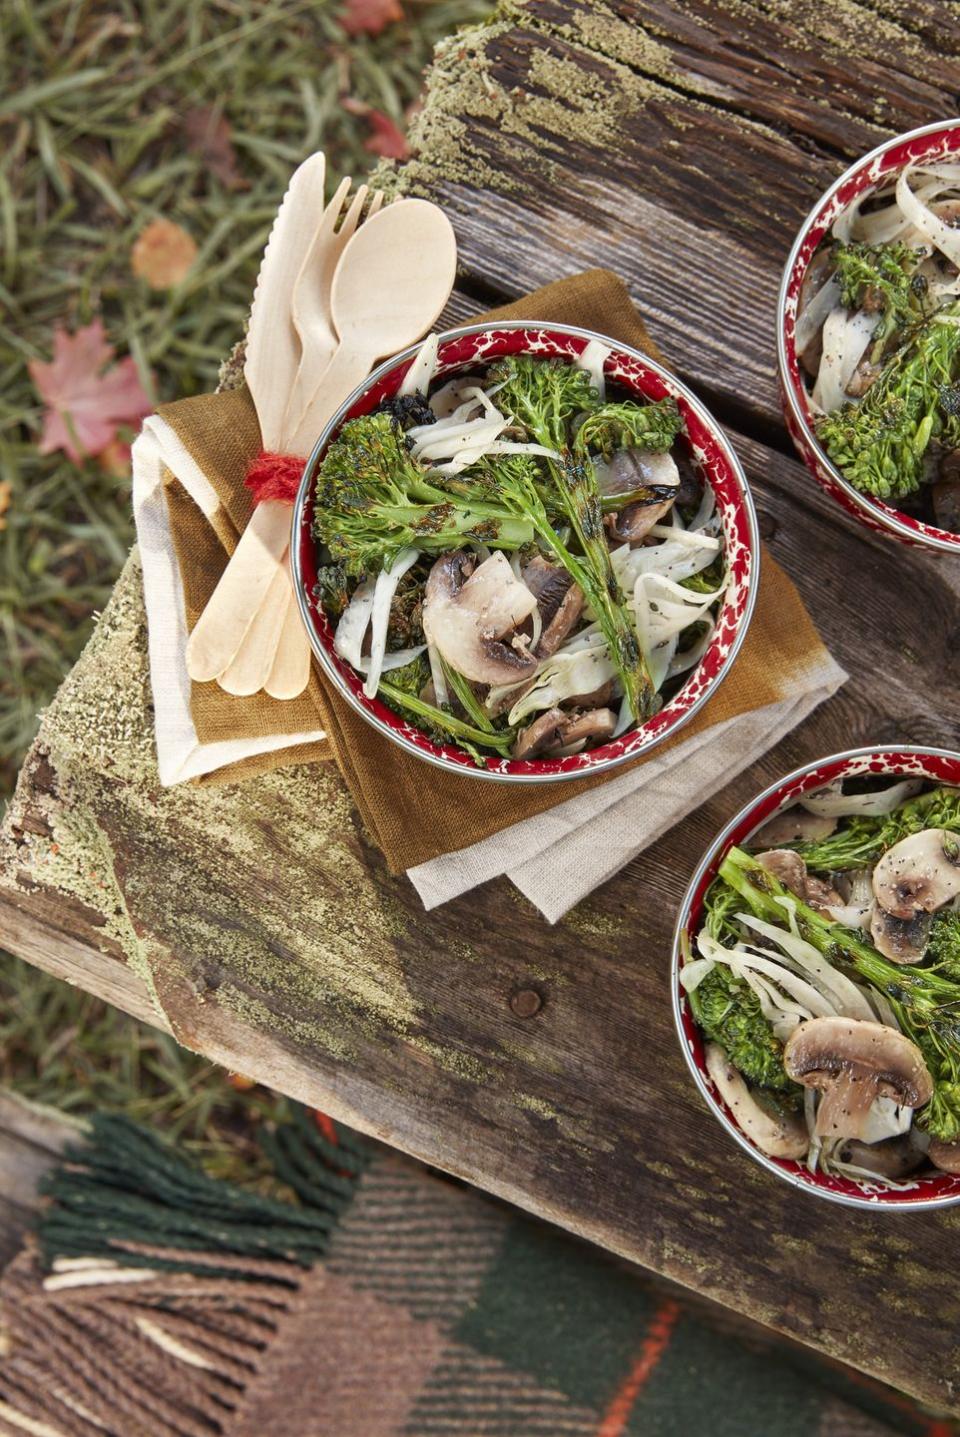 7) Marinated Mushroom-and-Charred Broccolini Salad